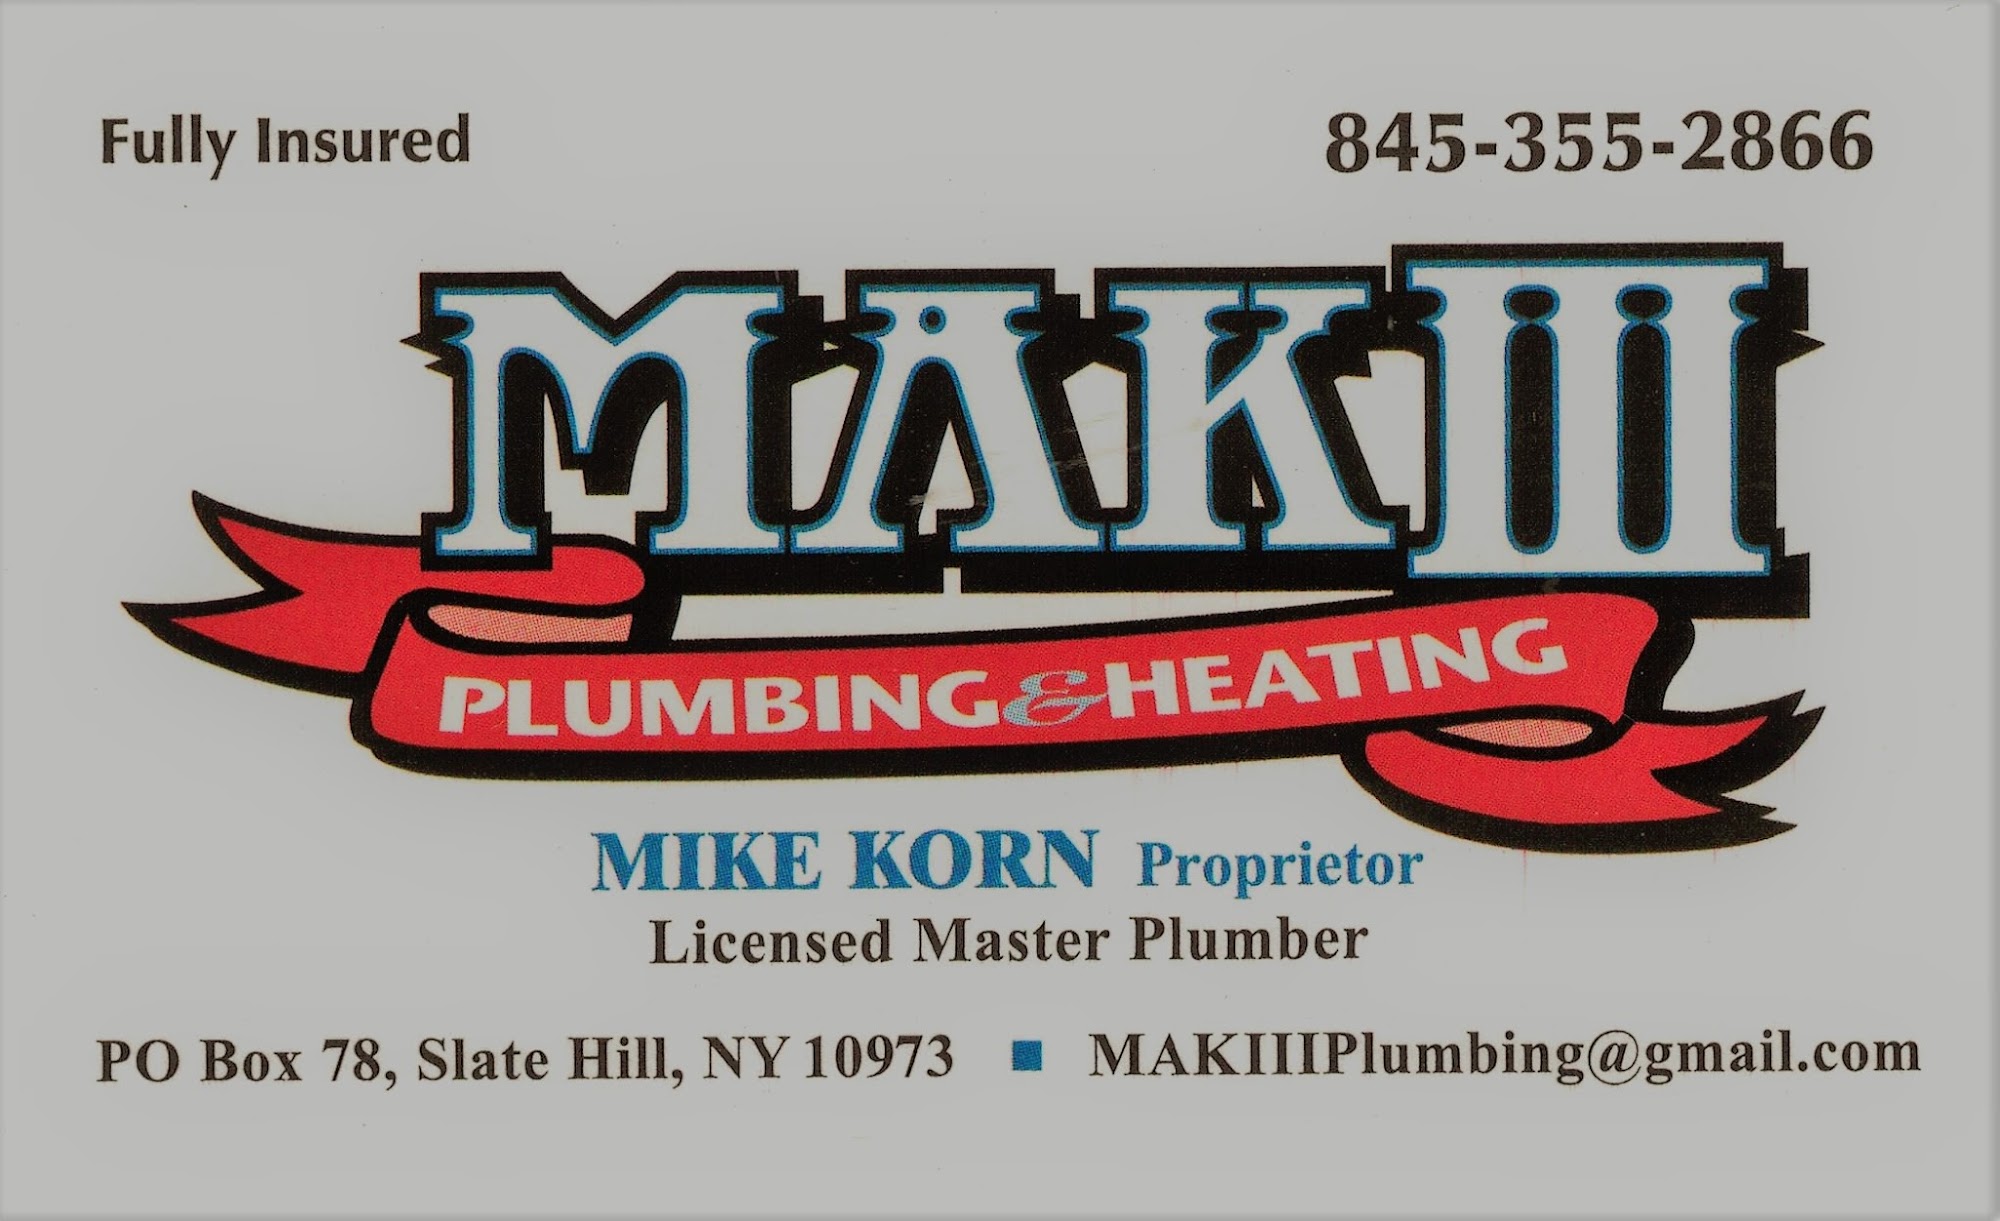 MAK III Plumbing & Heating, LLC 1990 NY-284 # 78, Slate Hill New York 10973